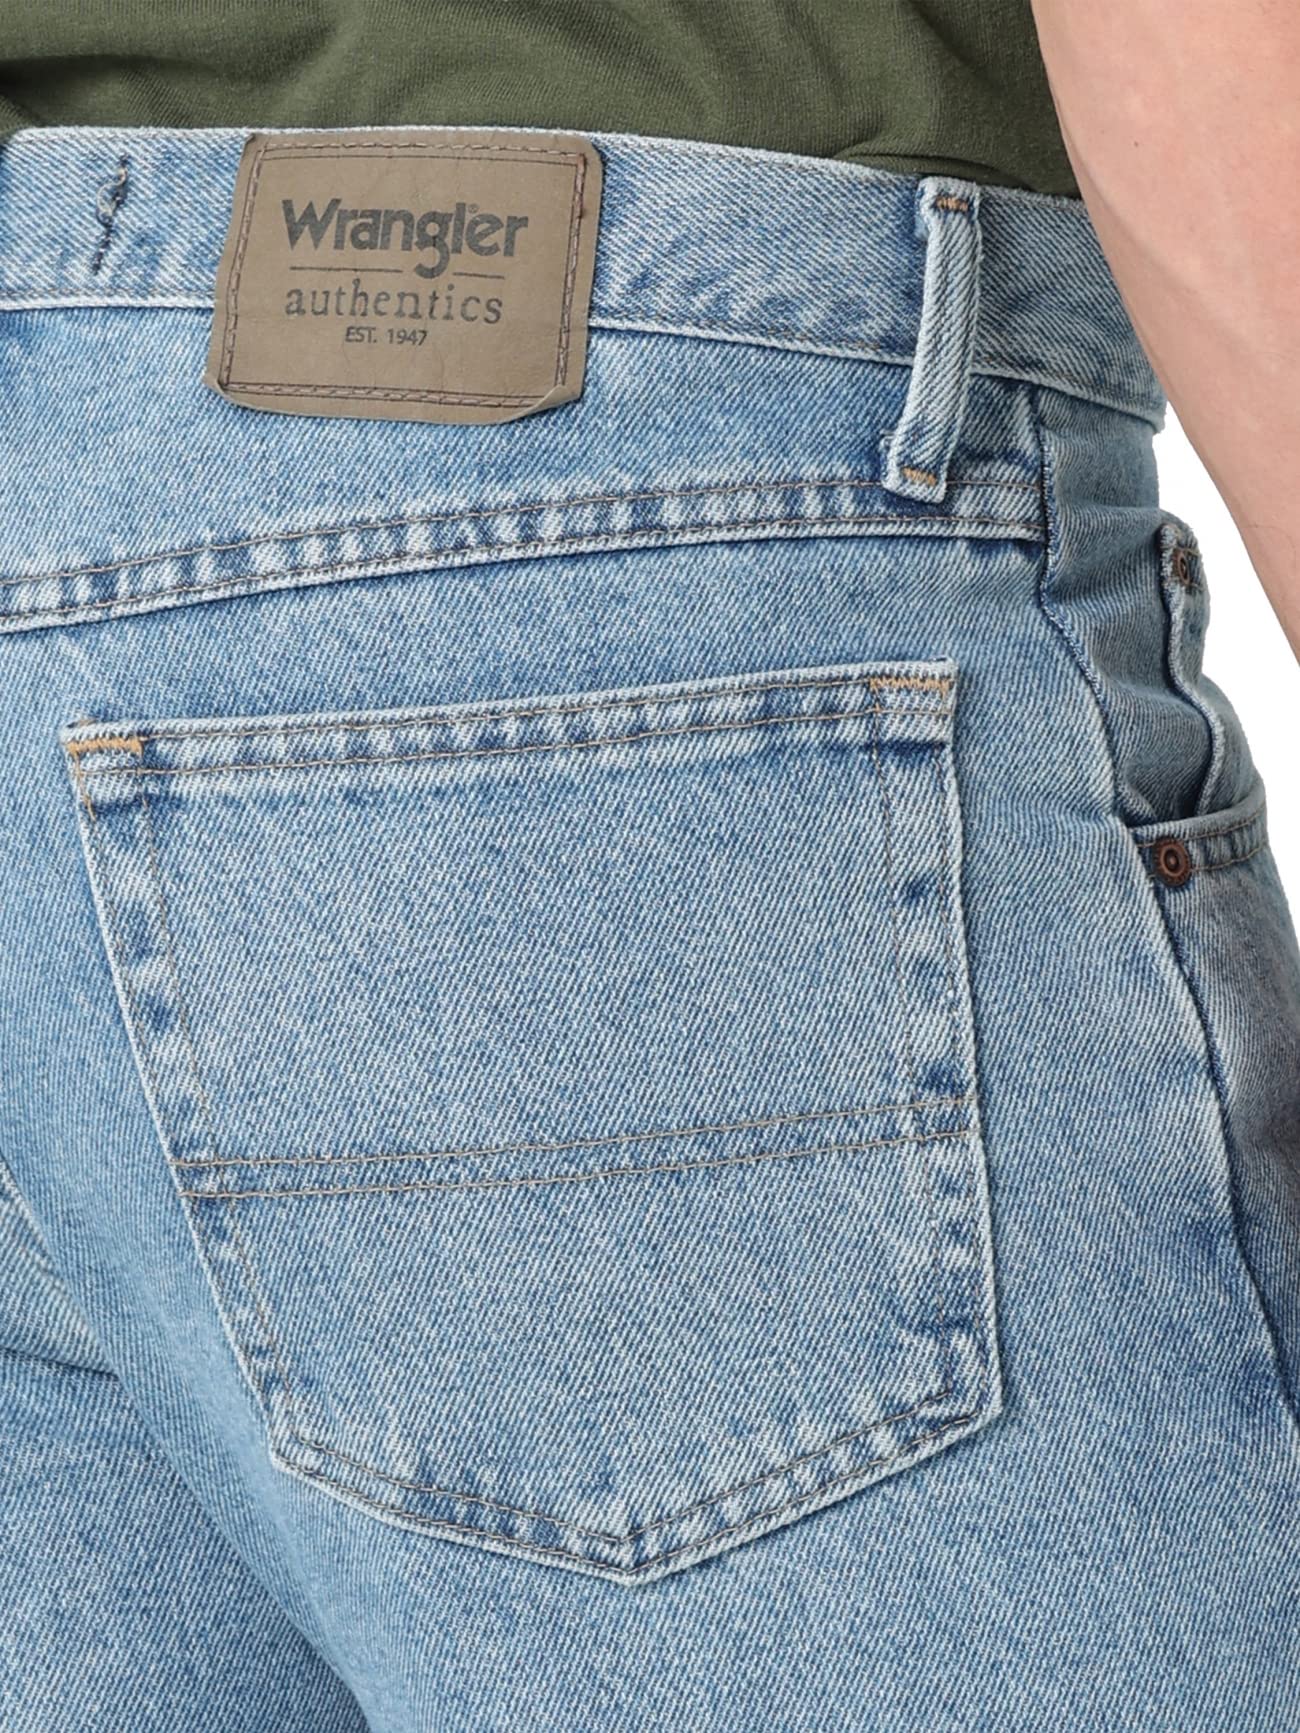 Wrangler Authentics Men's Classic 5-Pocket Regular Fit Cotton Jean, Light Stonewash, 30W x 32L